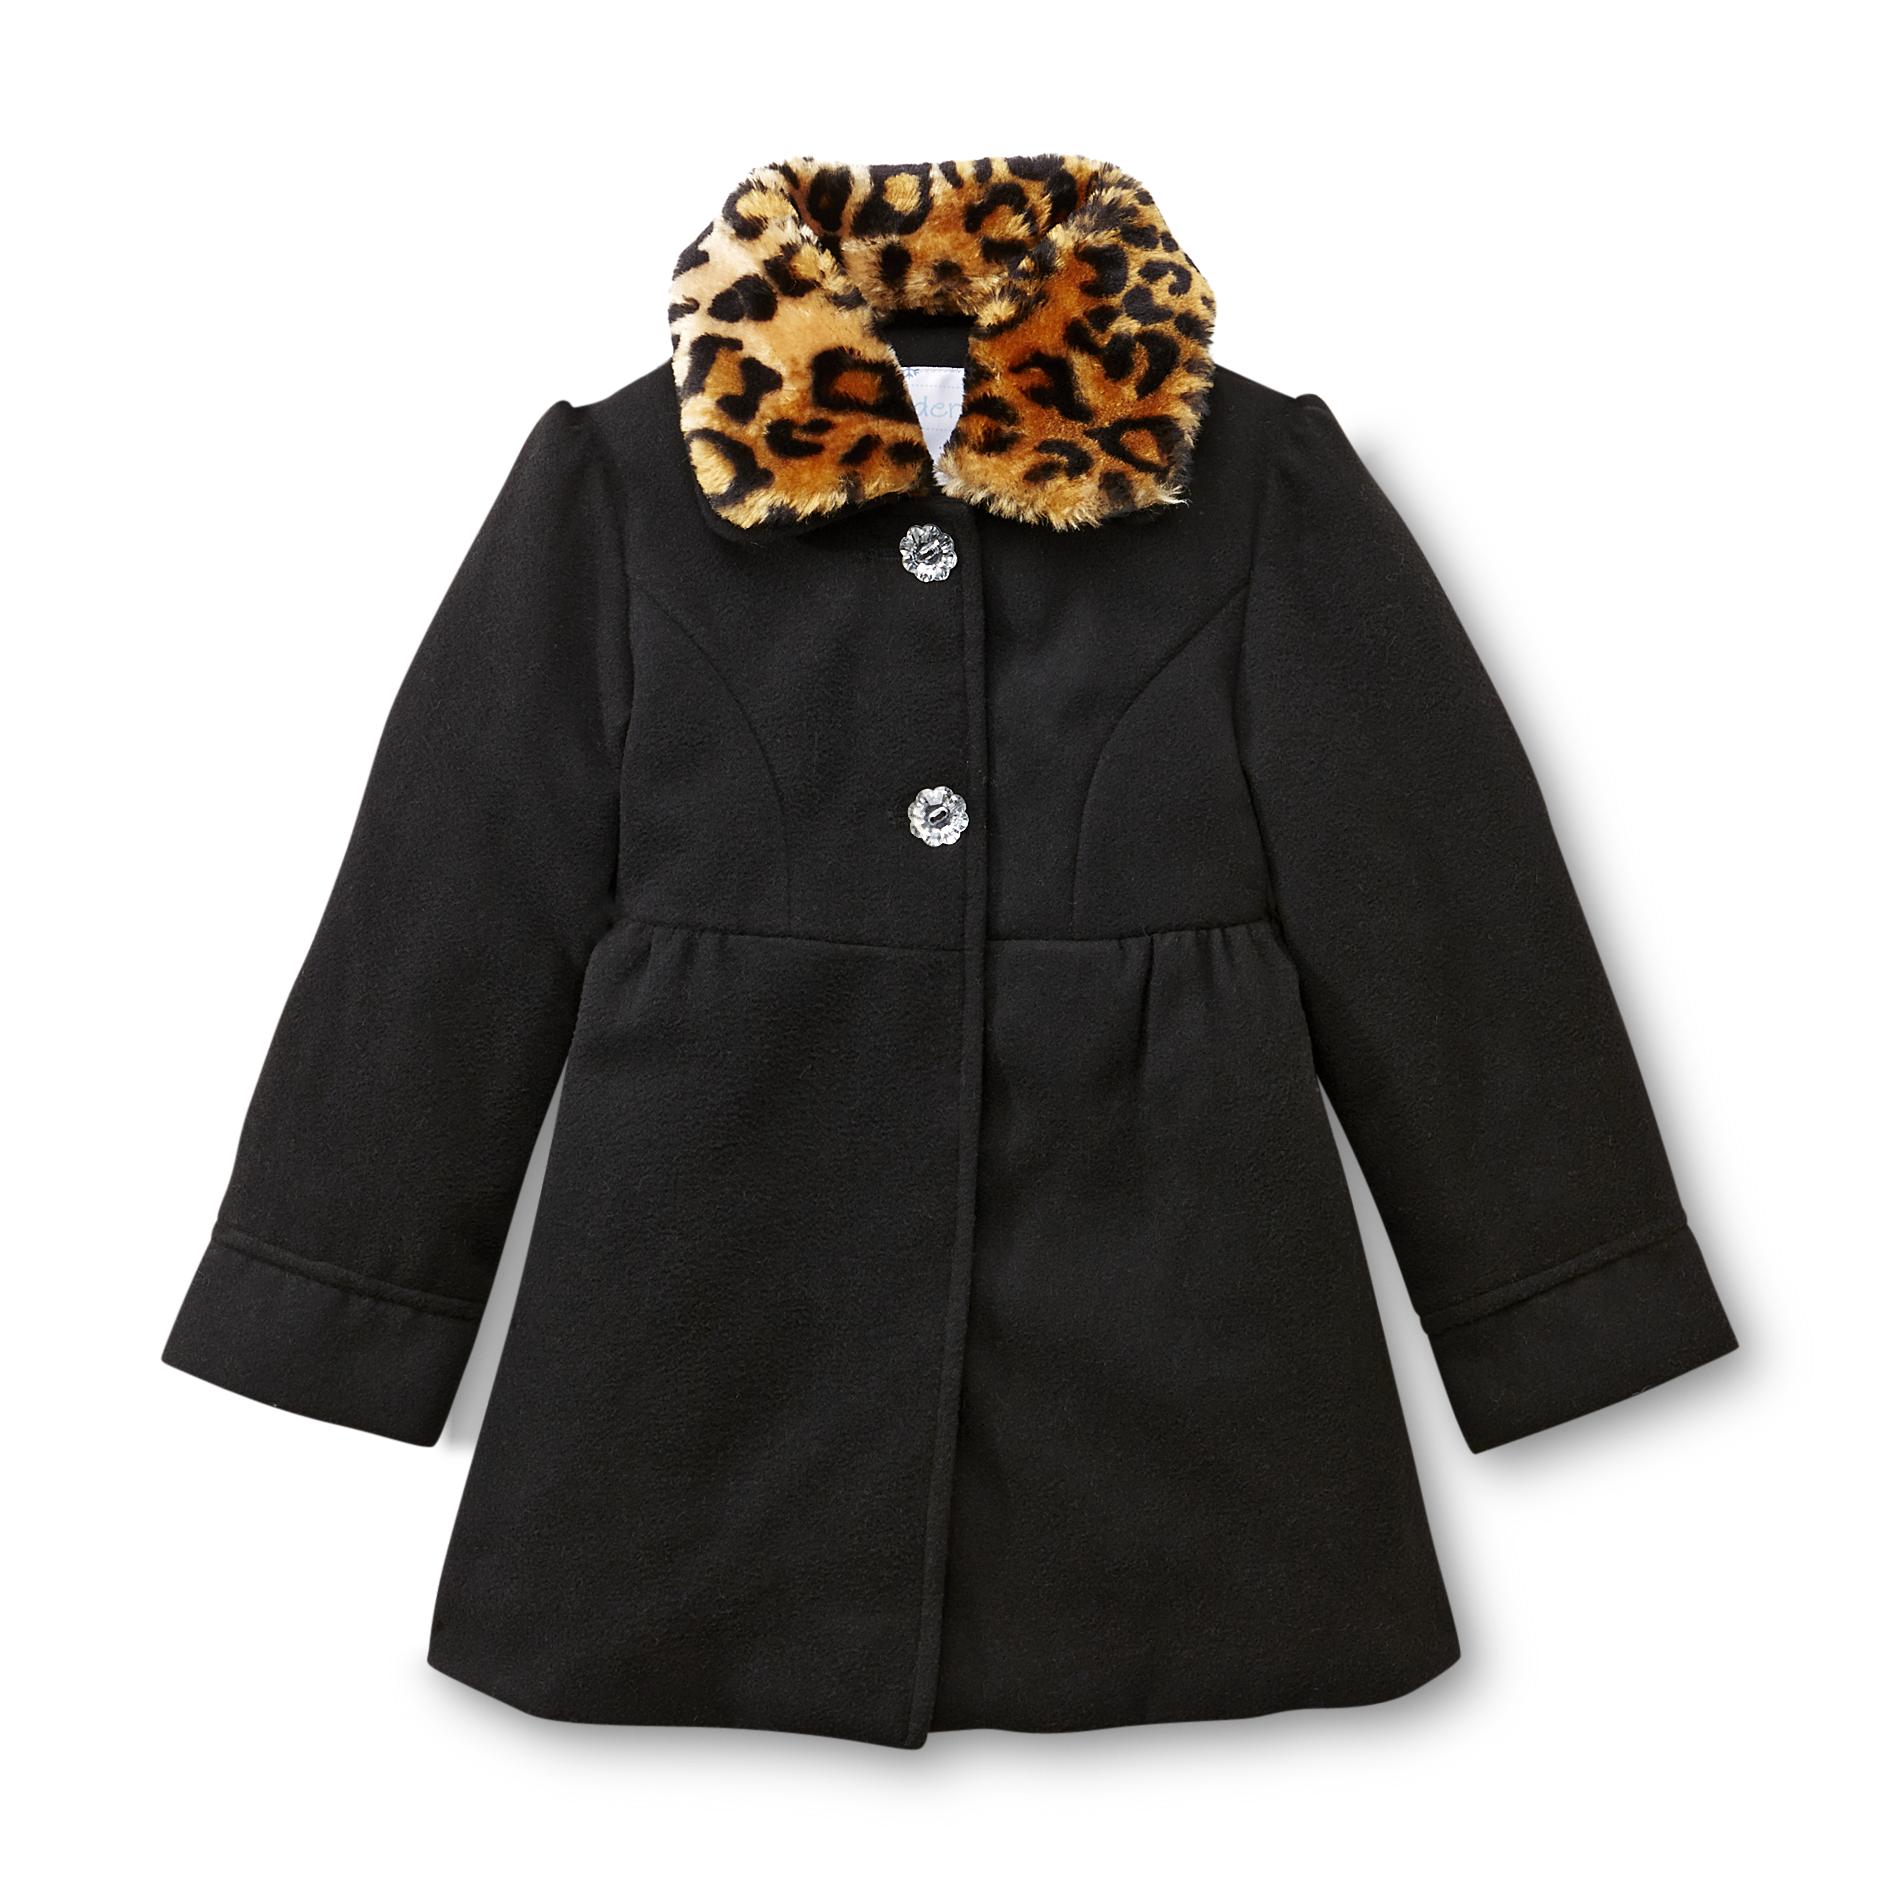 WonderKids Toddler Girl's Peplum Dress Coat - Leopard